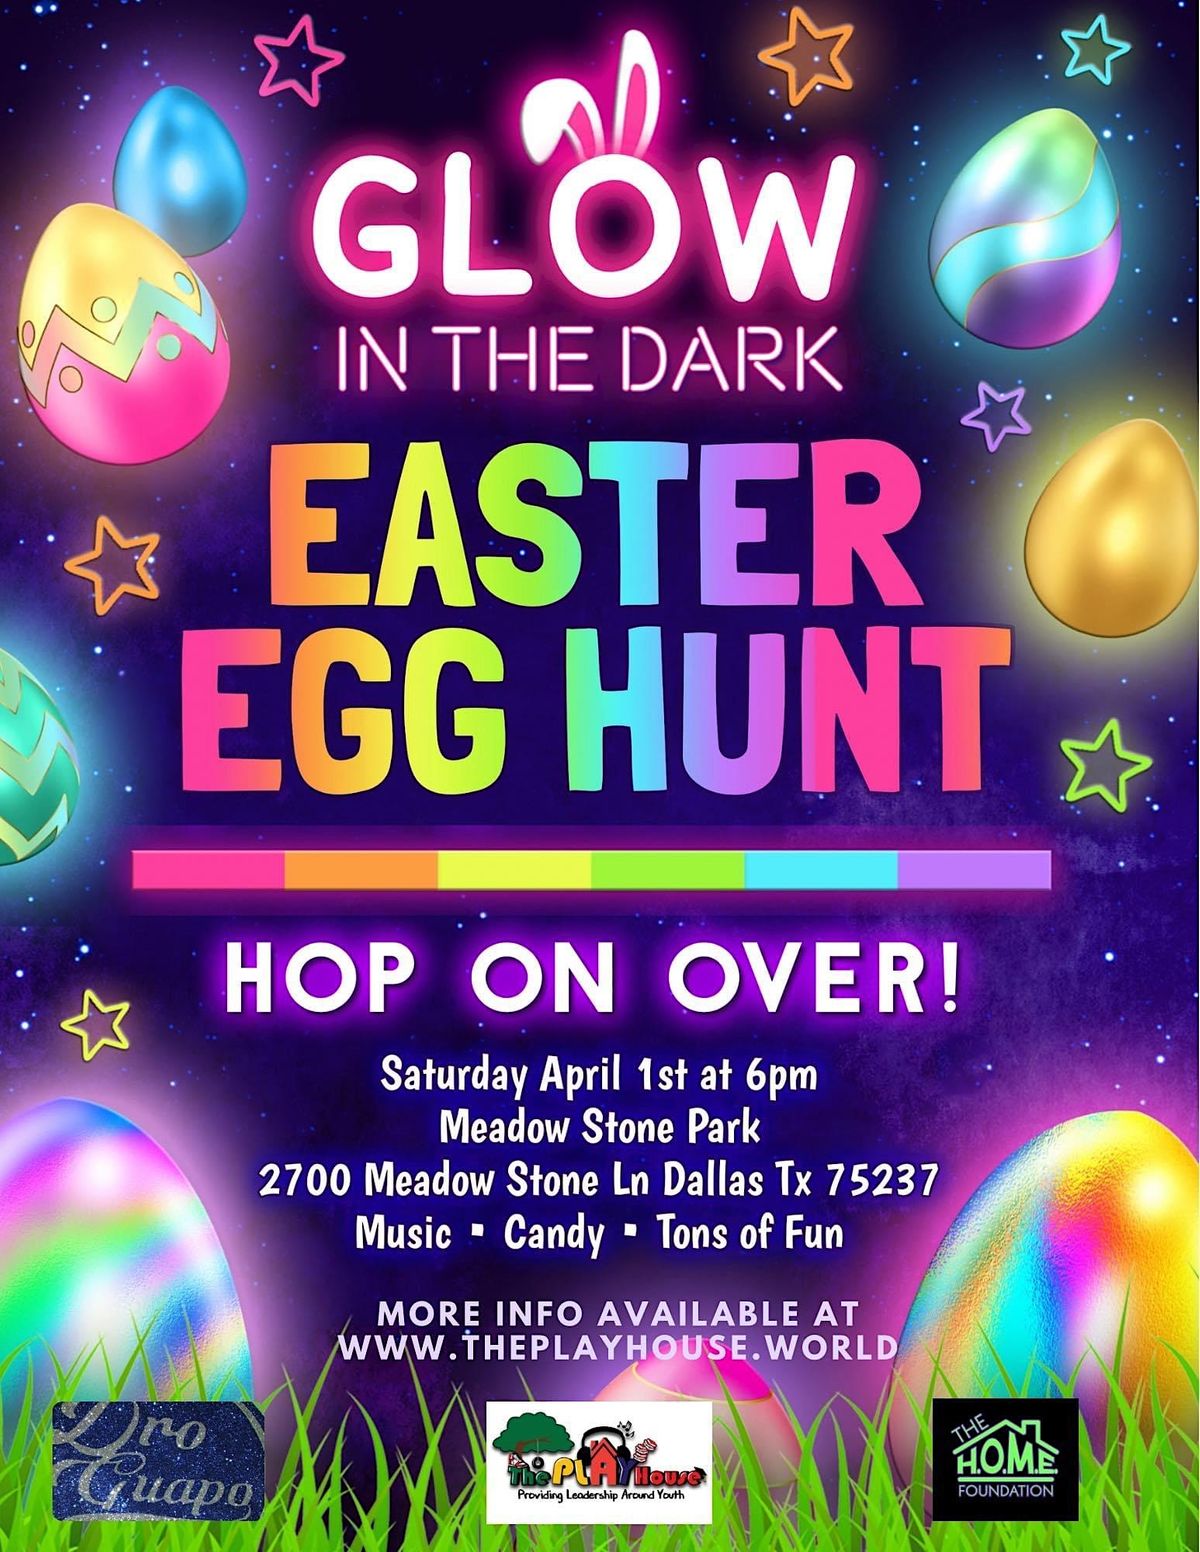 GLOW in the Dark Easter Egg Hunt